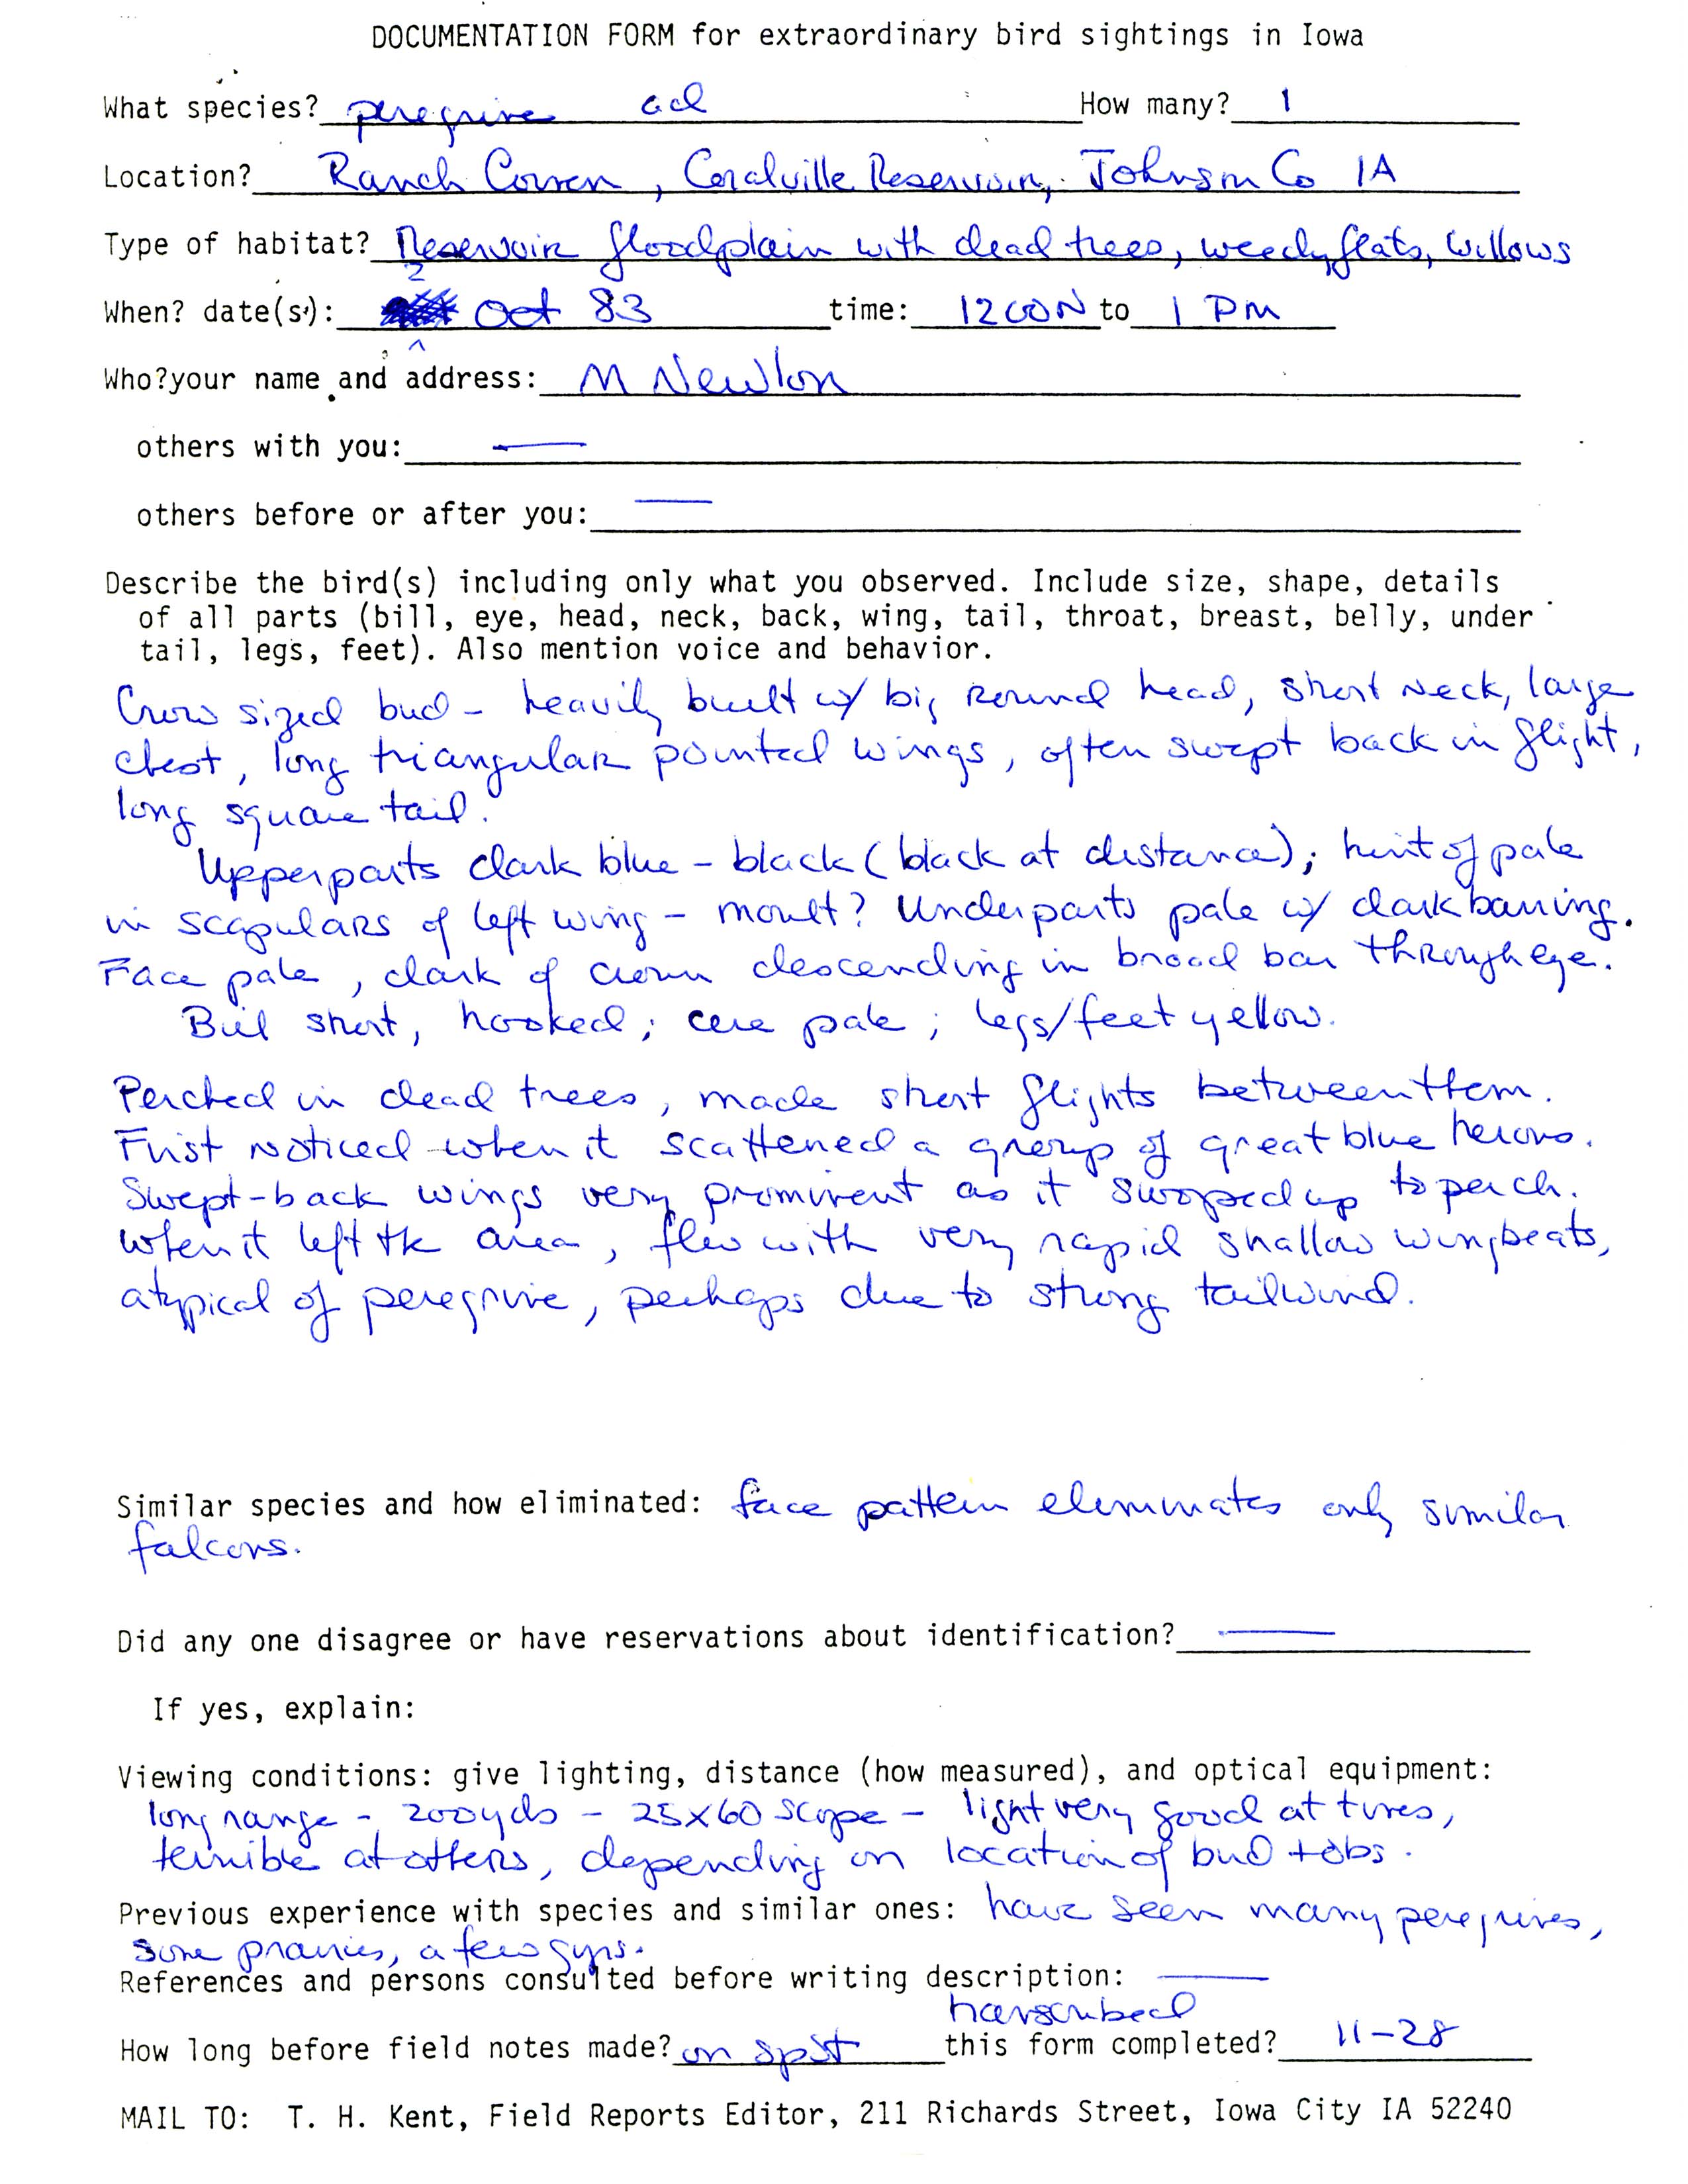 Rare bird documentation form for Peregrine Falcon at Coralville Reservoir, 1983